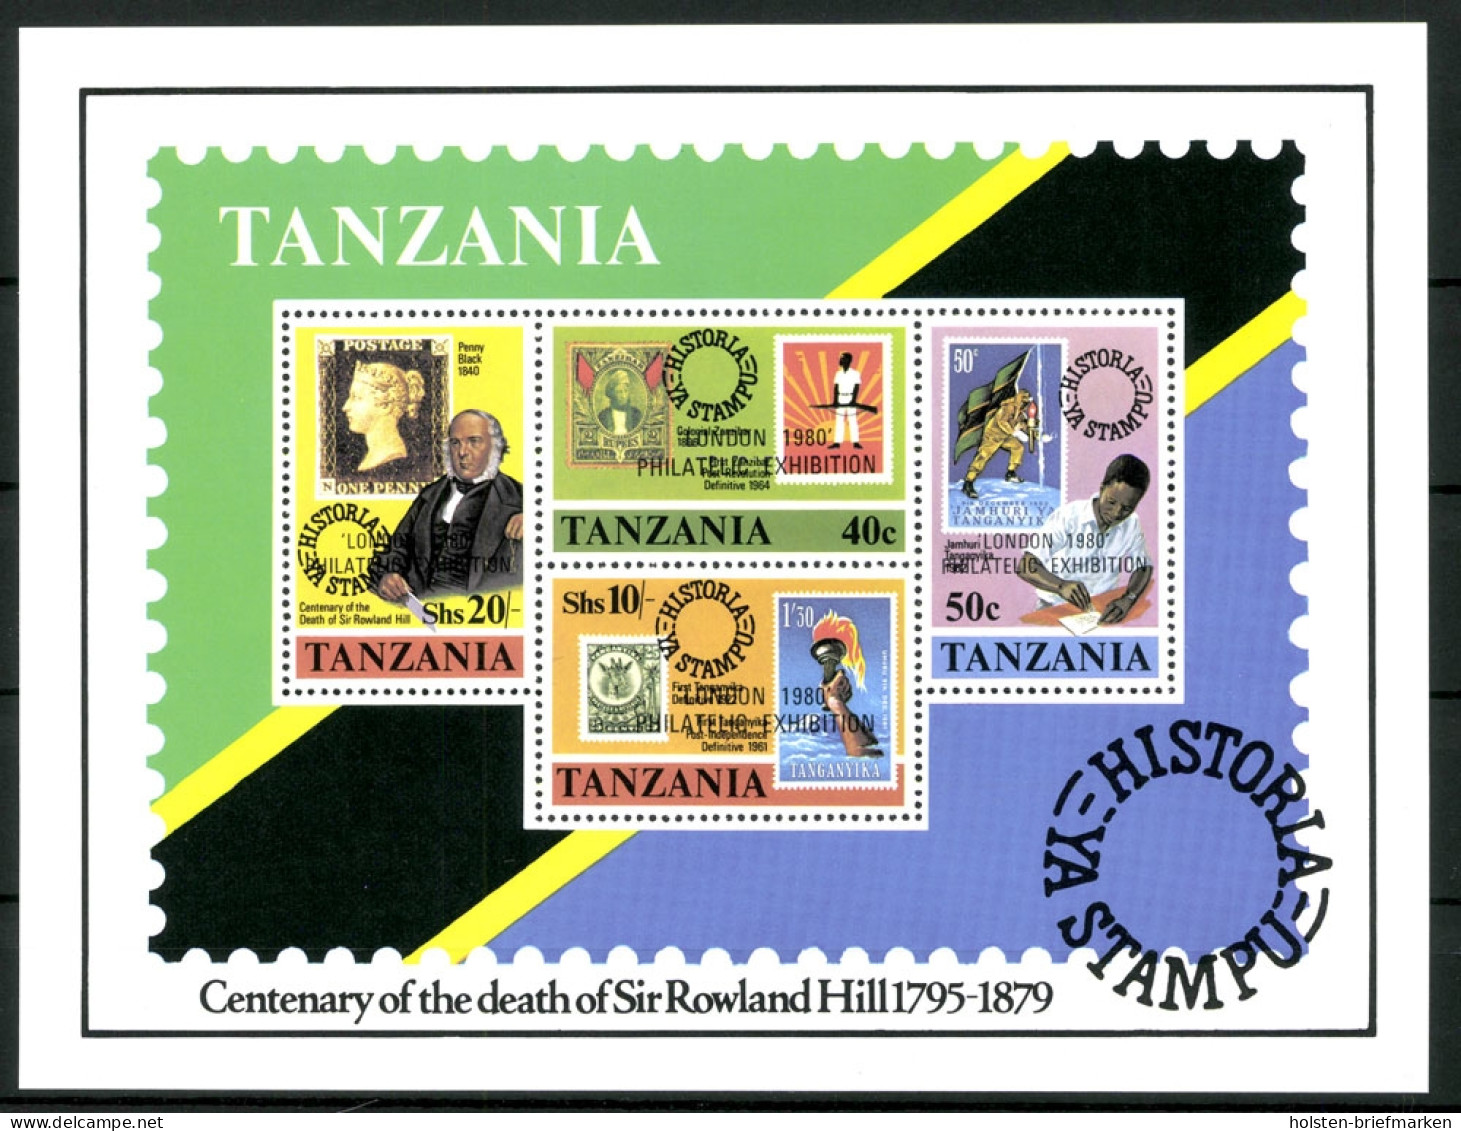 Tansania, MiNr. Block 21, Postfrisch - Tanzania (1964-...)